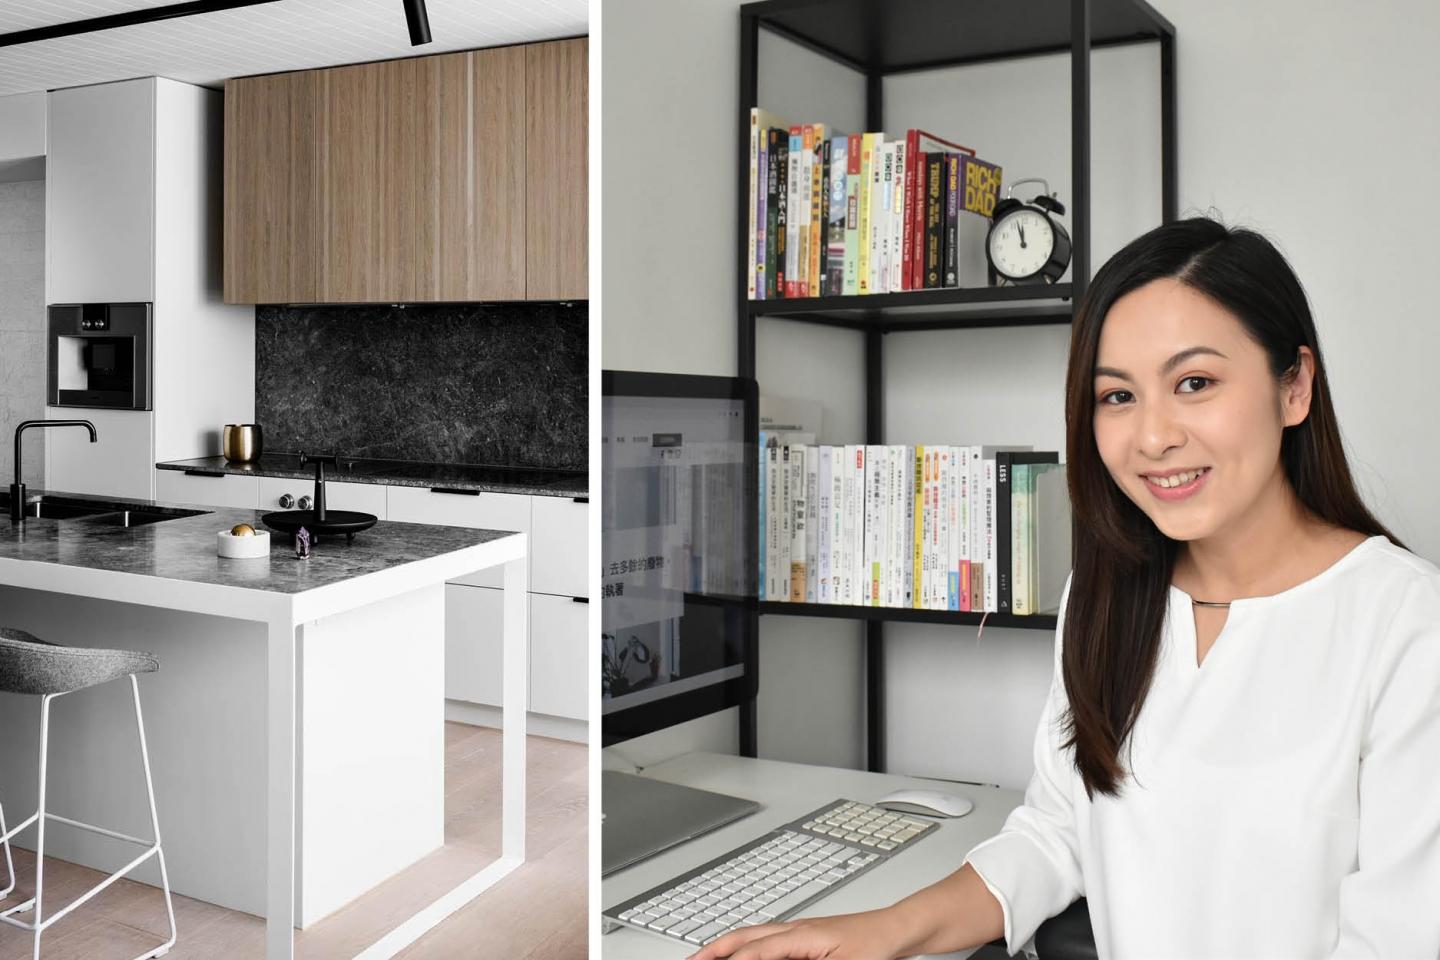 Home Therapy創辦人兼日系收納師Sharon Lam表示整理得當的空間是精彩生活的關鍵 (左圖攝影：Tom Blachford)